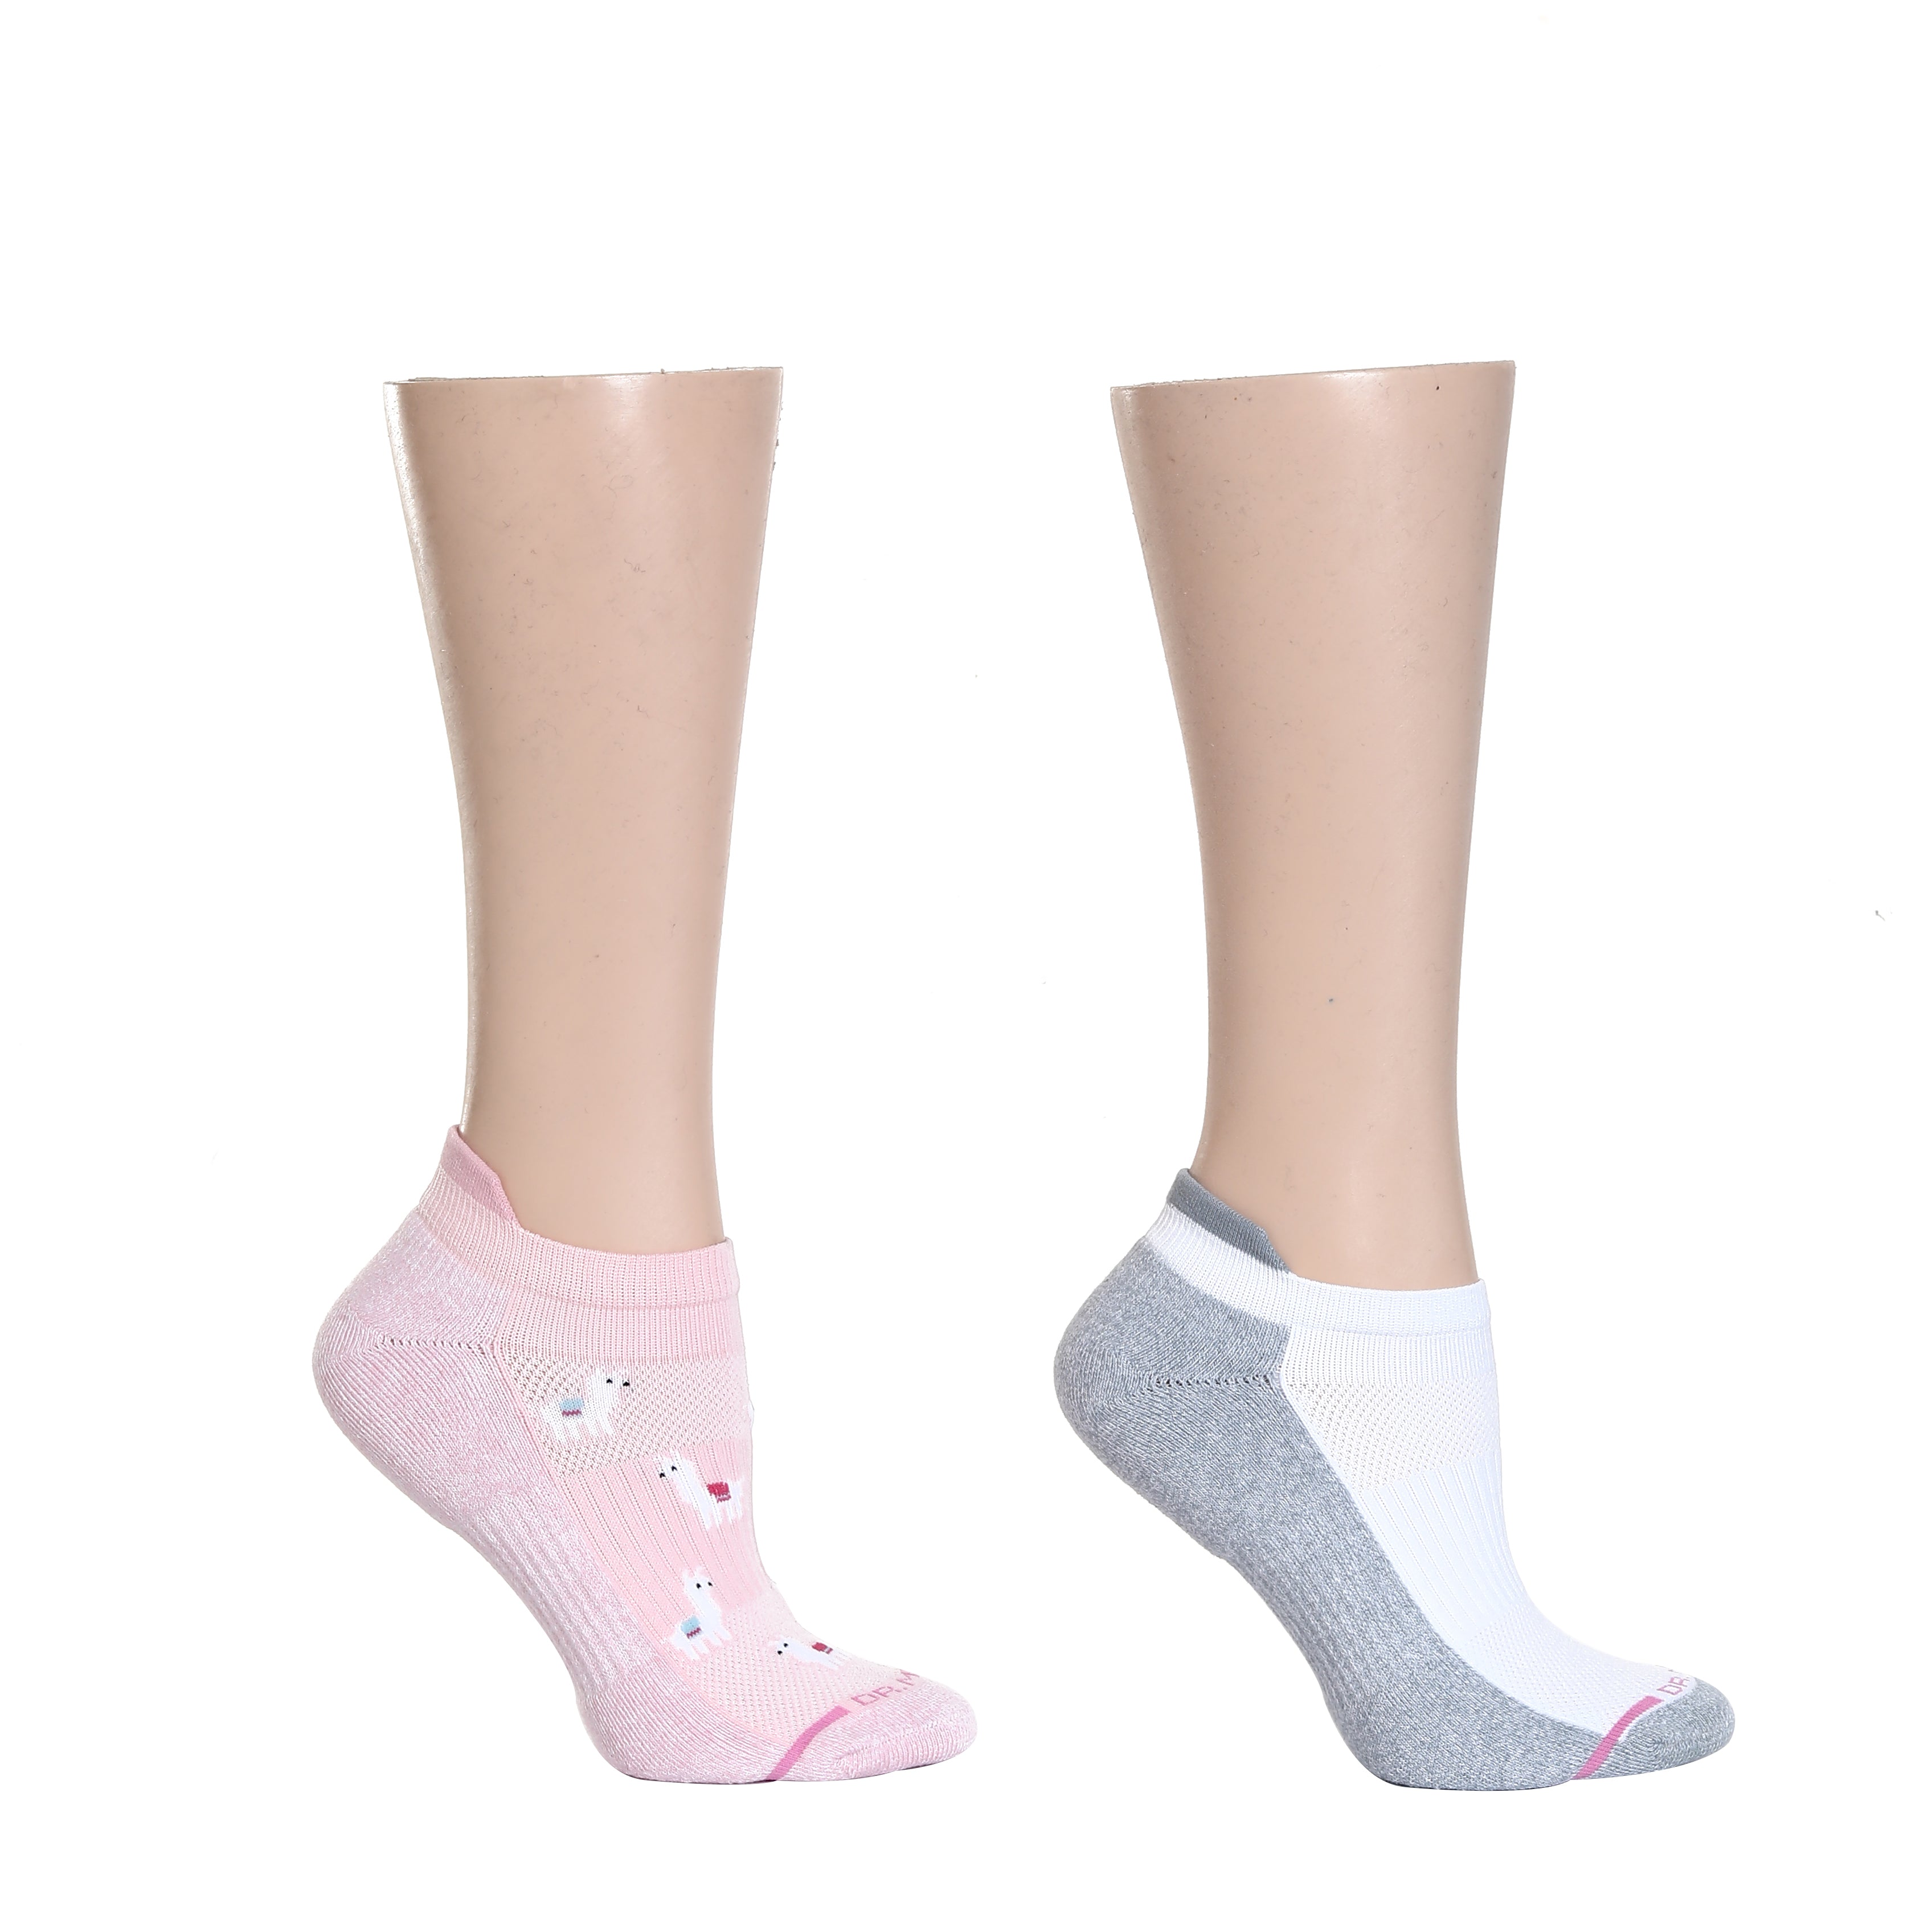 Llama | Ankle Compression Socks For Women